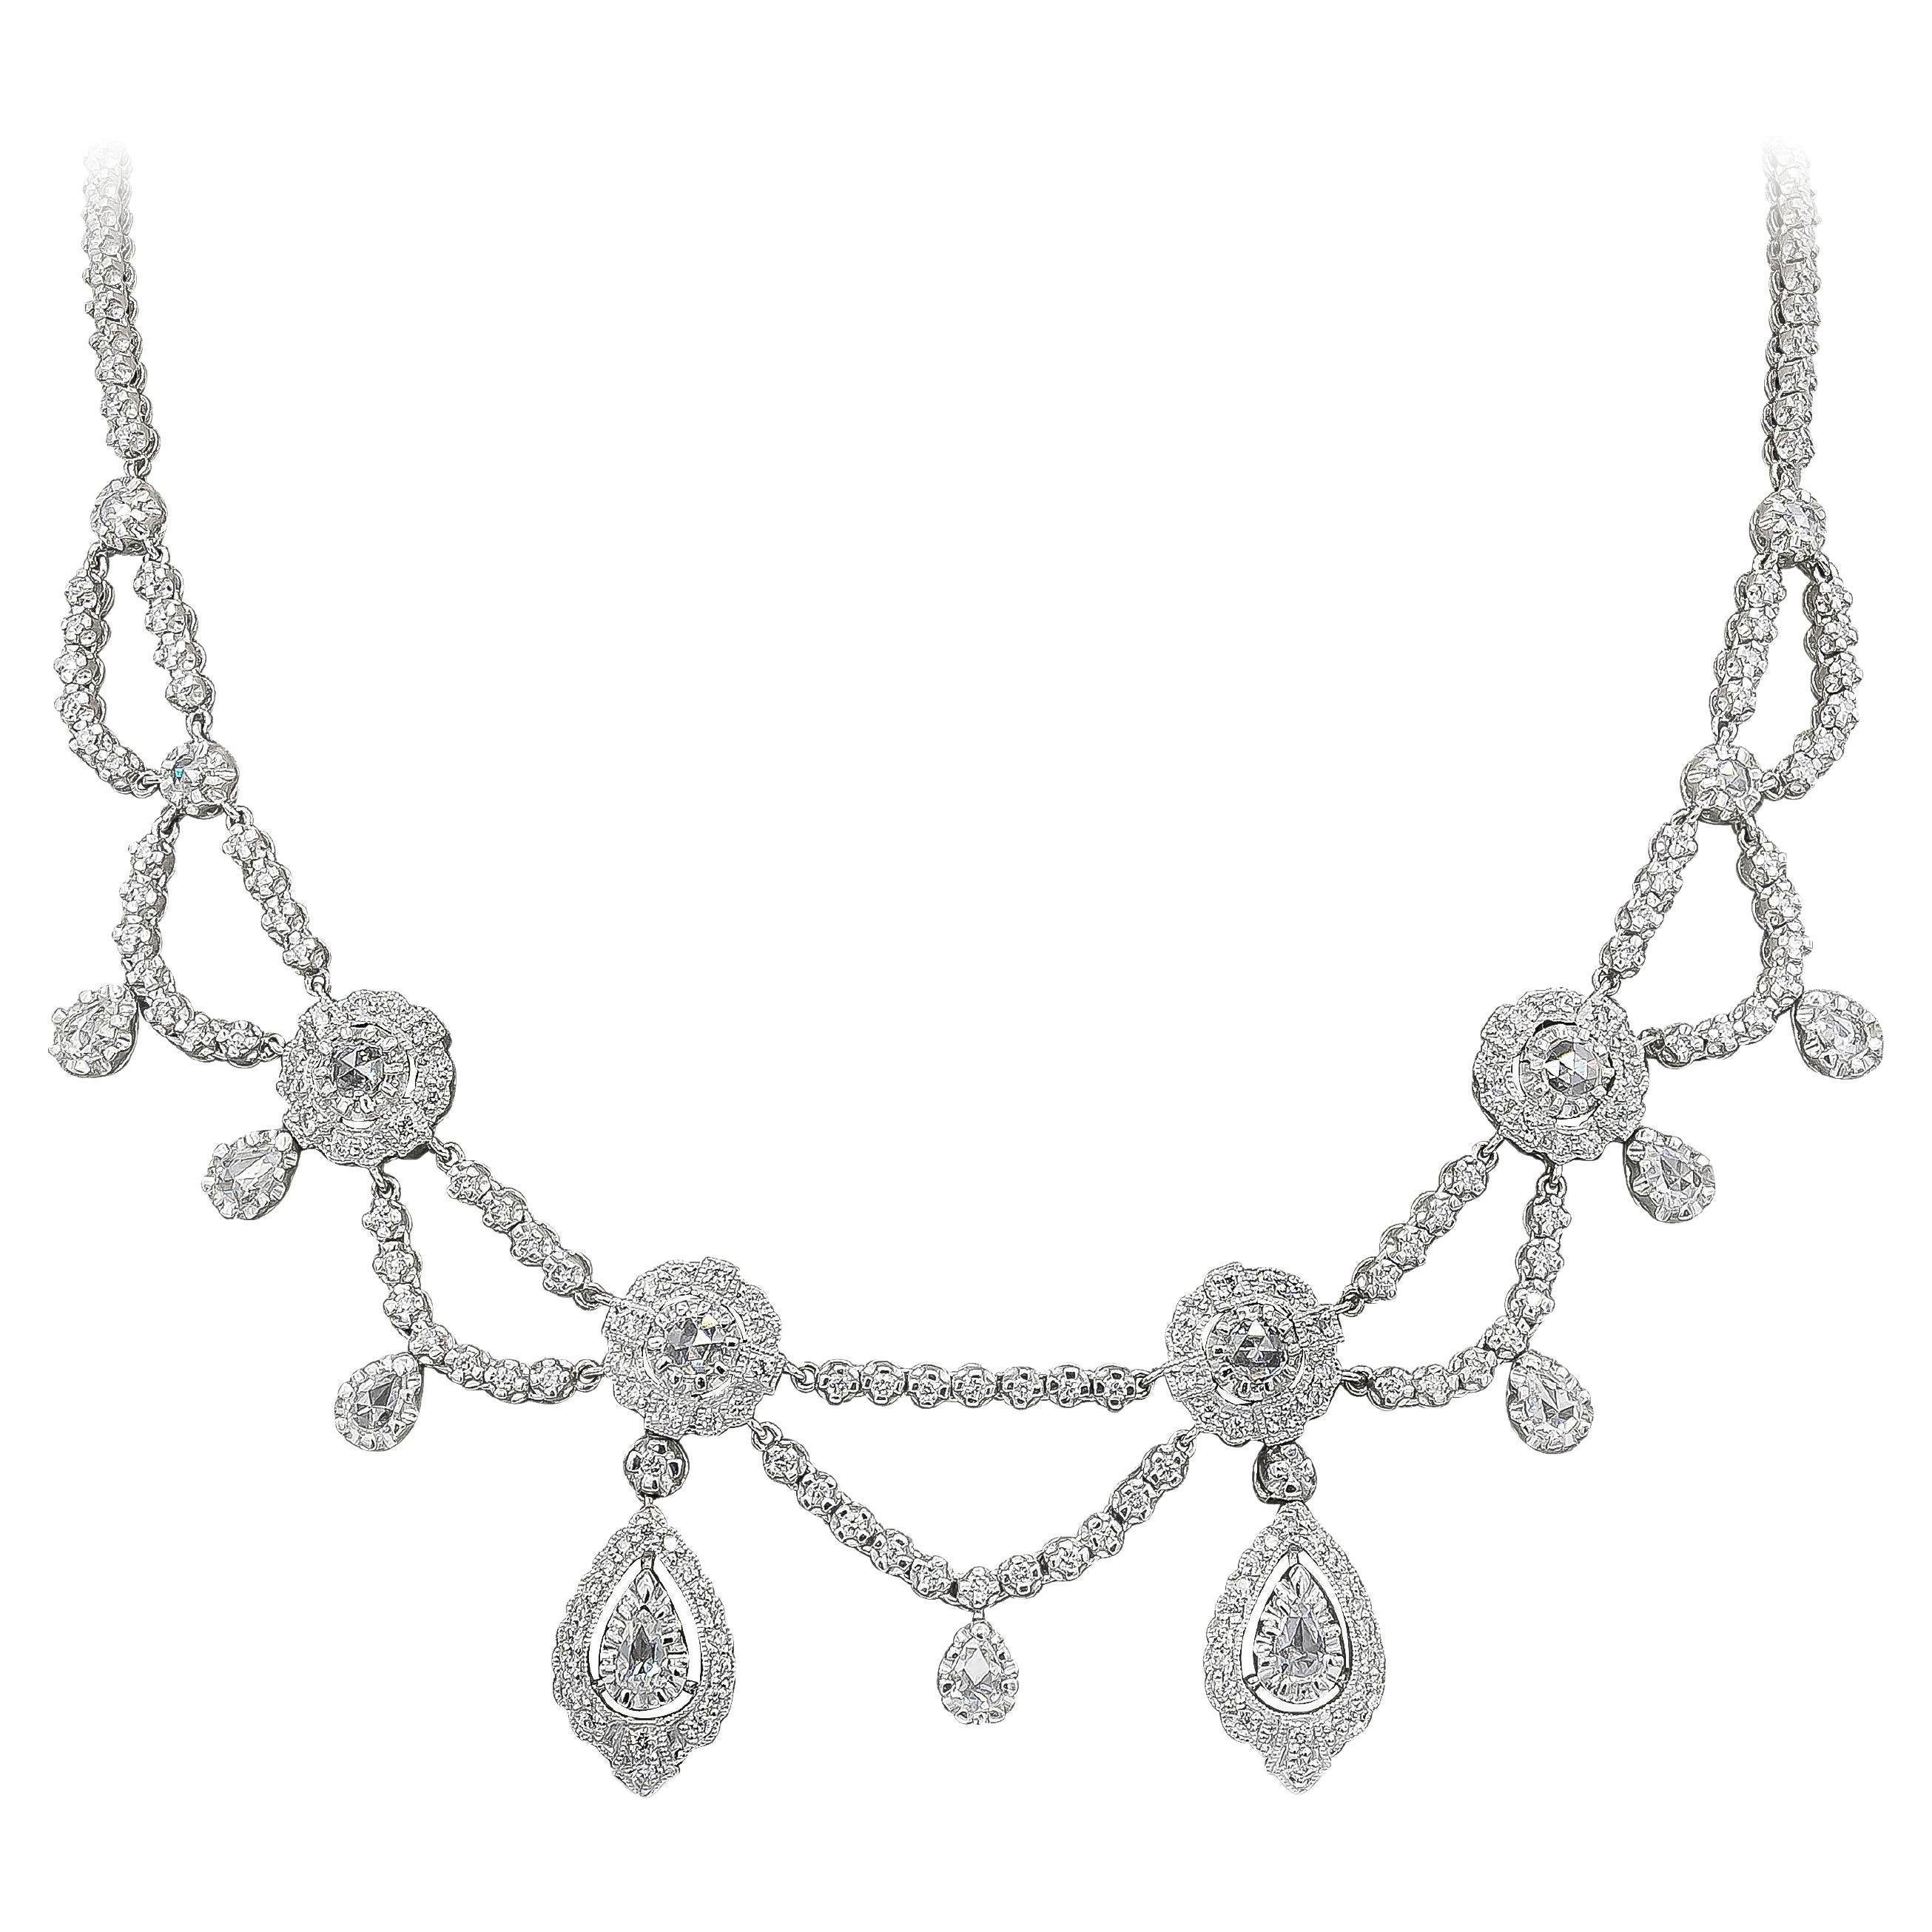 Roman Malakov 4.33 Carats Total Rose Cut Antique Curtain Style Diamond Necklace 